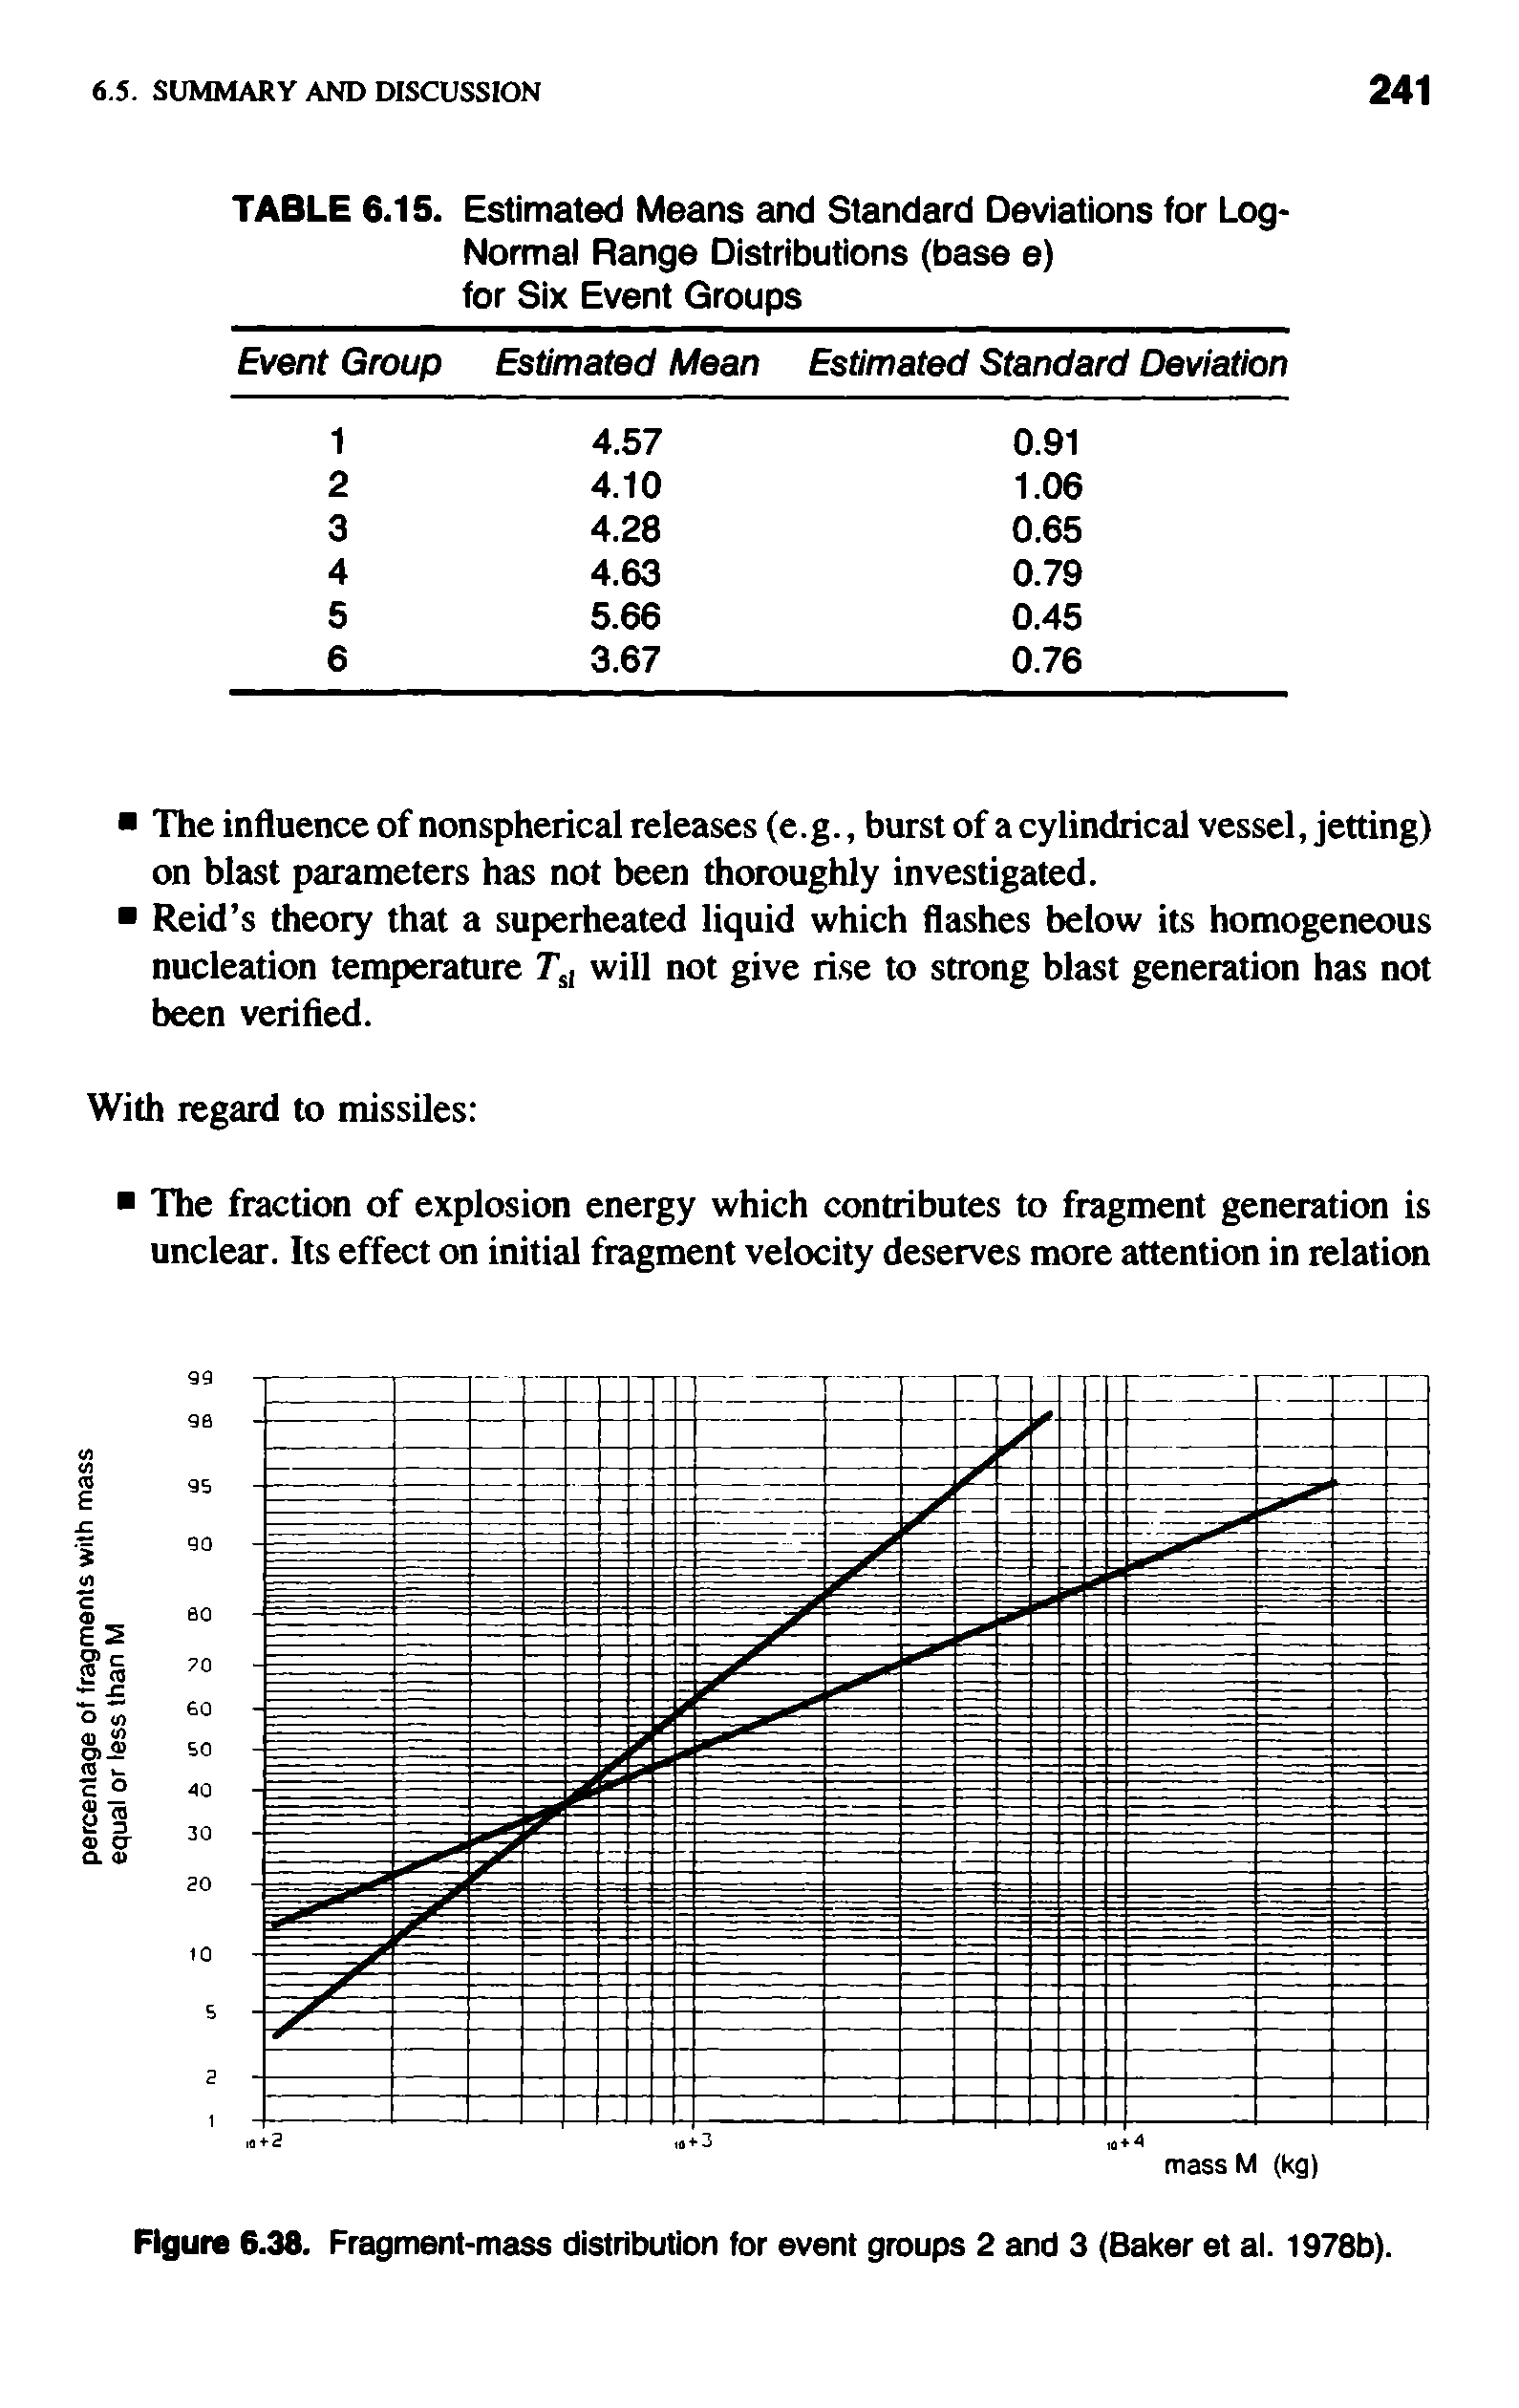 Figure 6.38. Fragment-mass distribution for event groups 2 and 3 (Baker et al. 1978b).